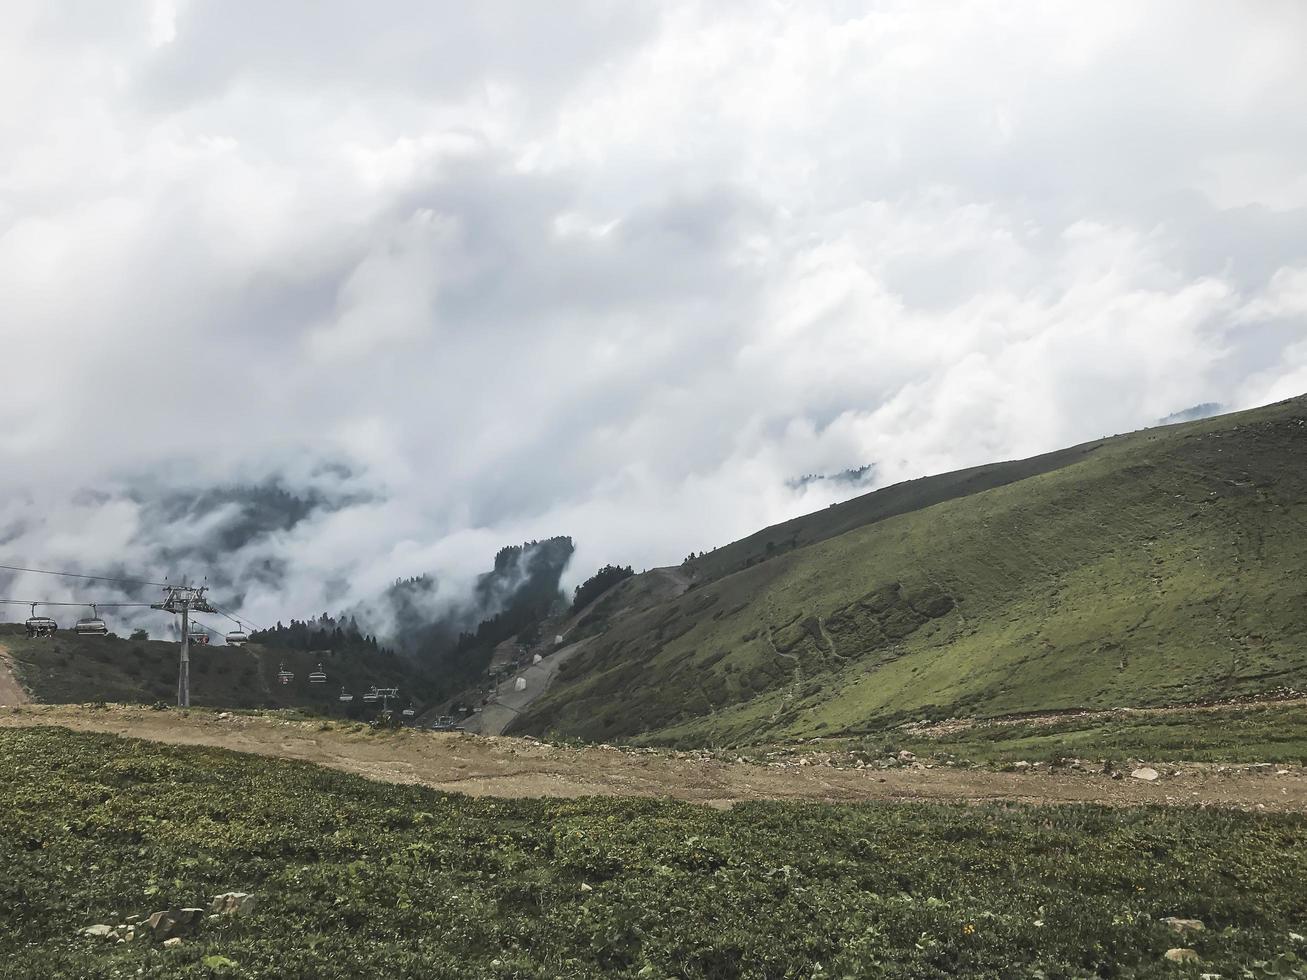 Caucasus mountains wrappednin clouds. Roza Khutor, Russia photo